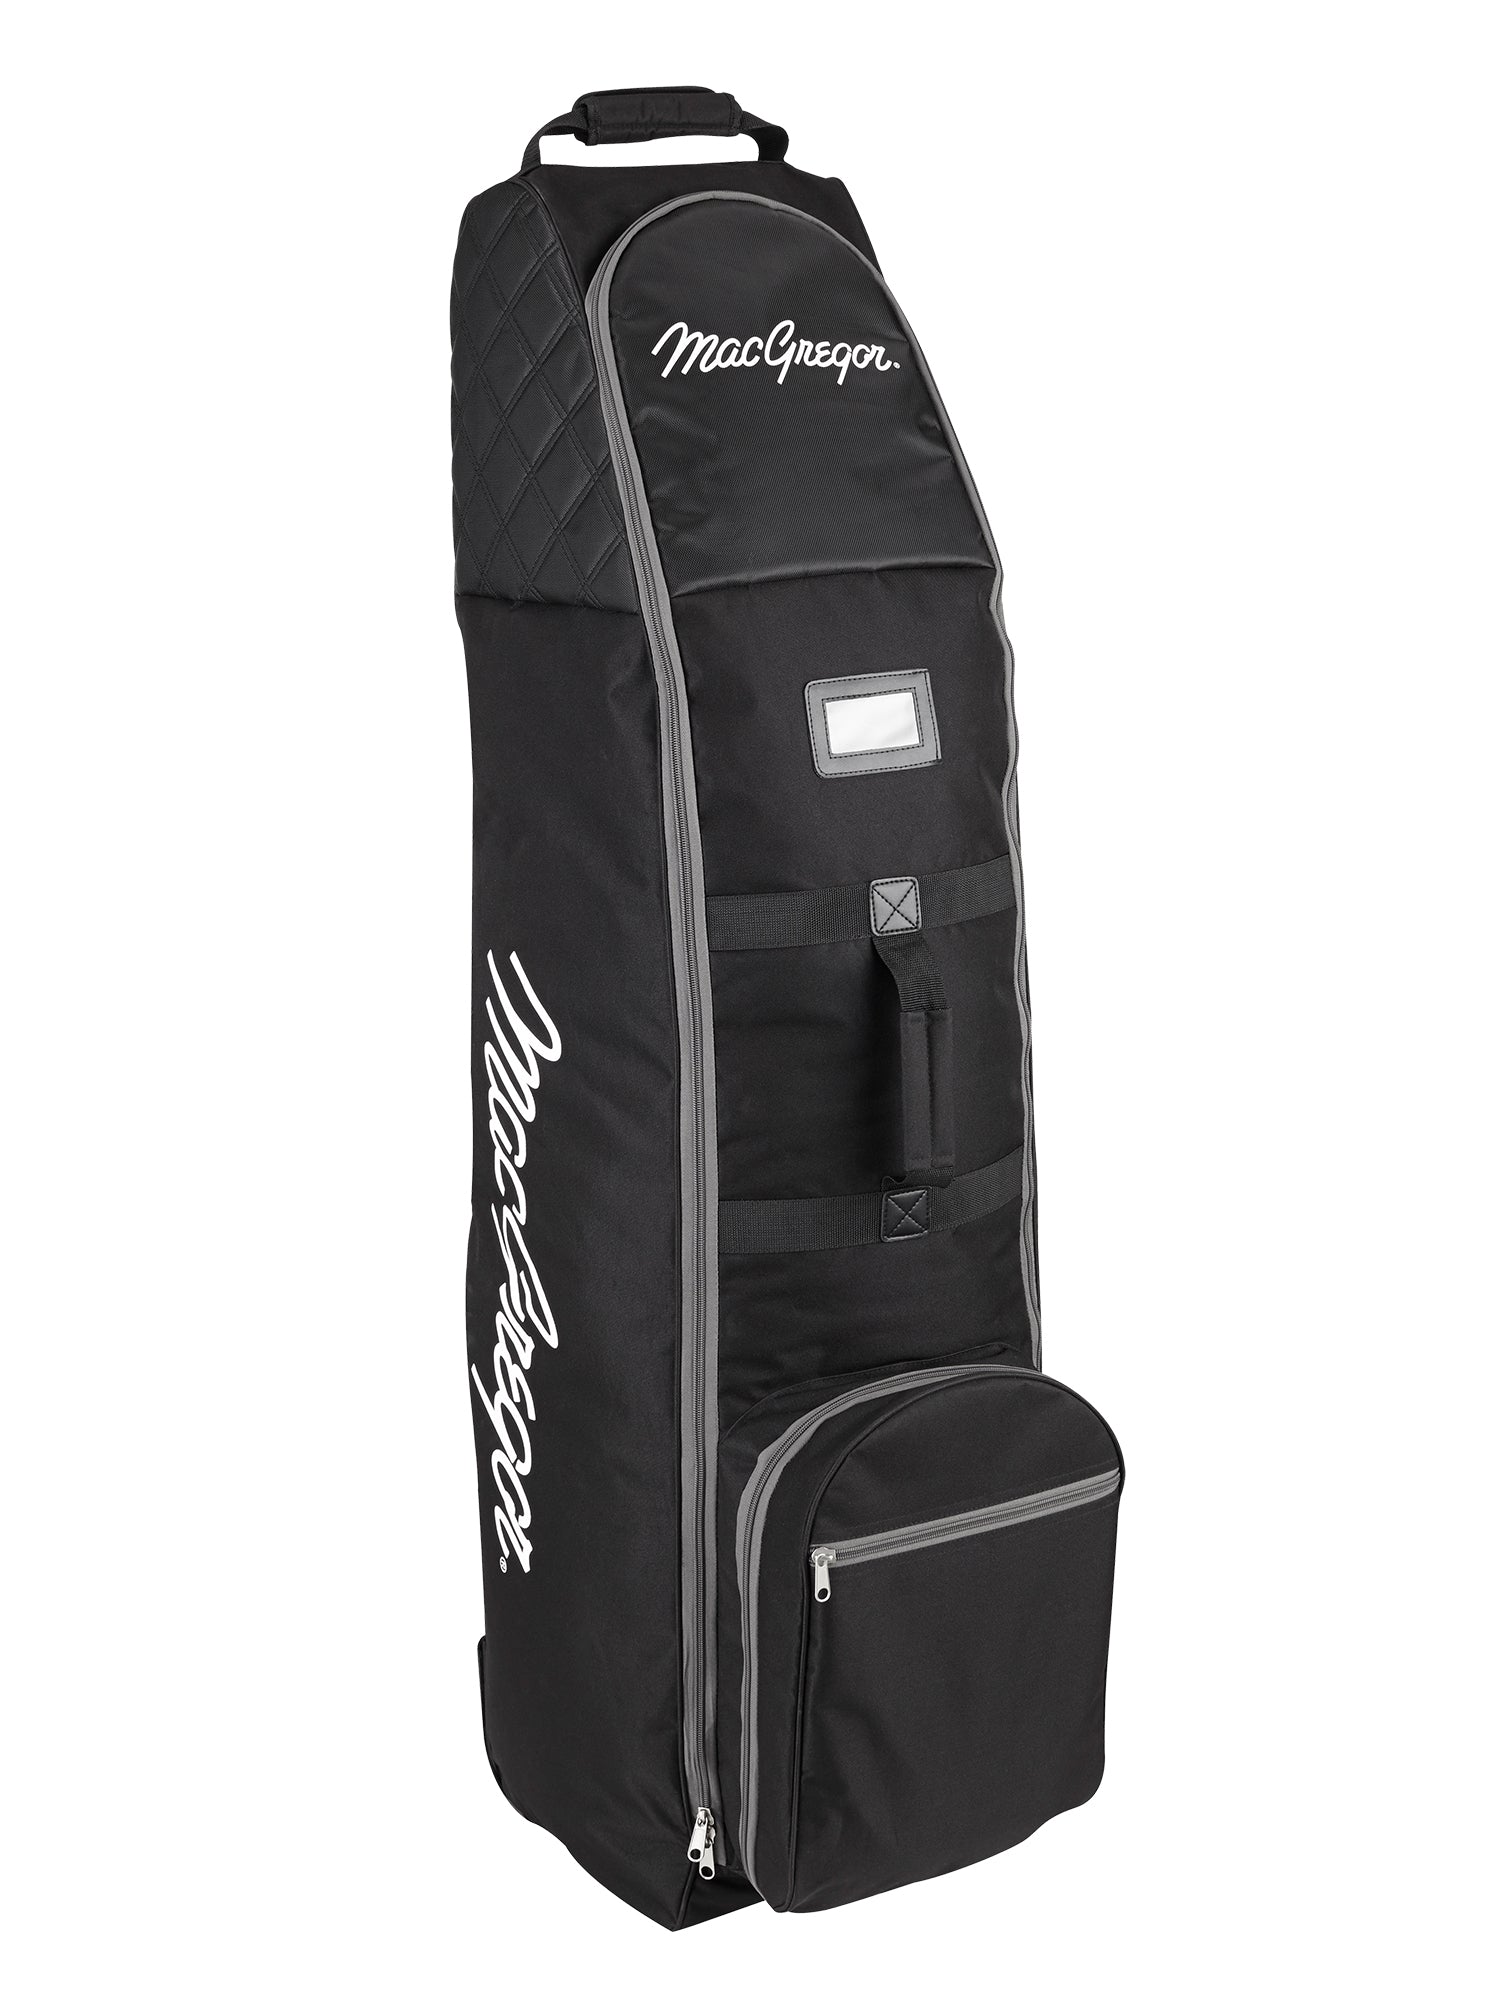 wheeled golf bag travel cover